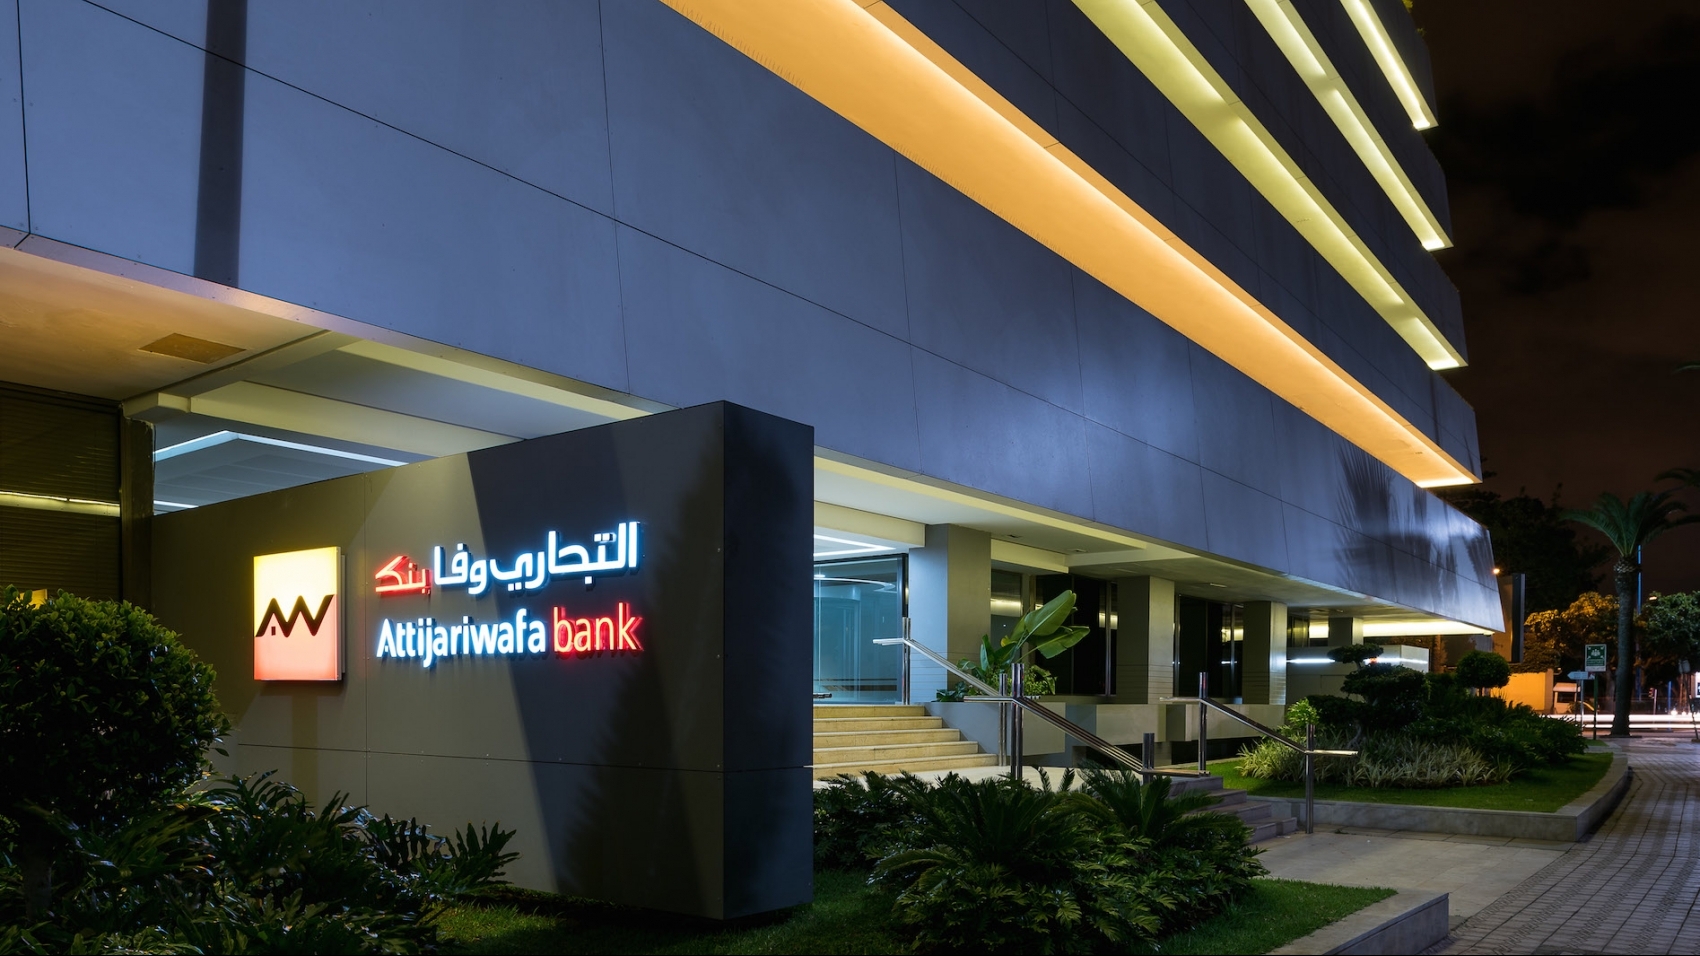 Attijariwafa bank élue meilleure banque marocaine 2020 en matière de trade finance par Global Trade Review